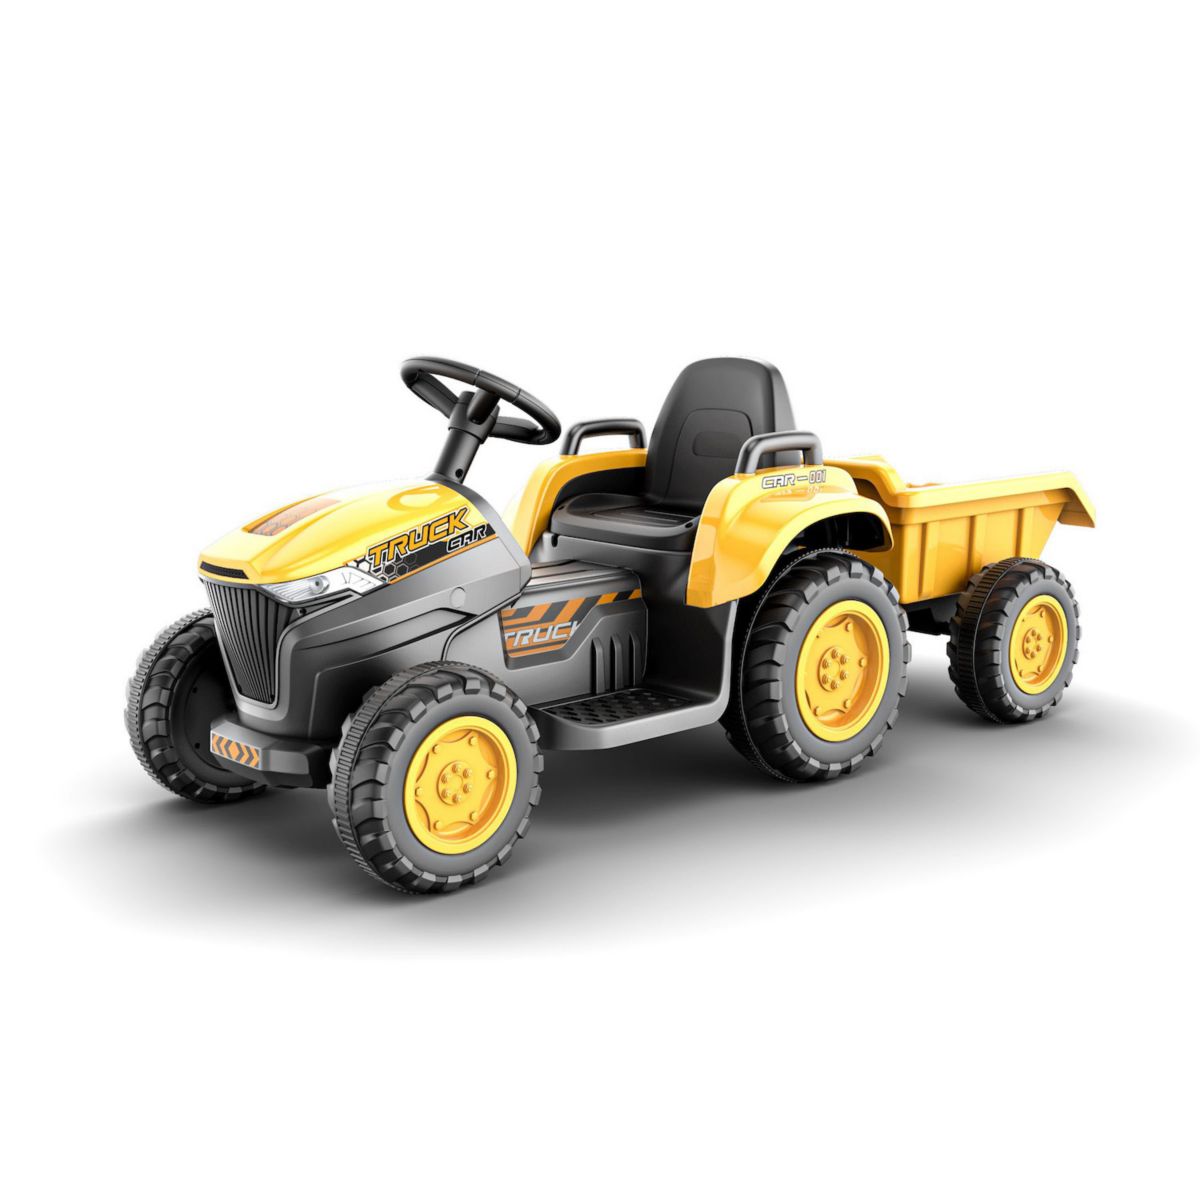 Blazin Wheels Комплект Blazin Tractor Yellow 12V для автомобиля и прицепа Blazin Wheels